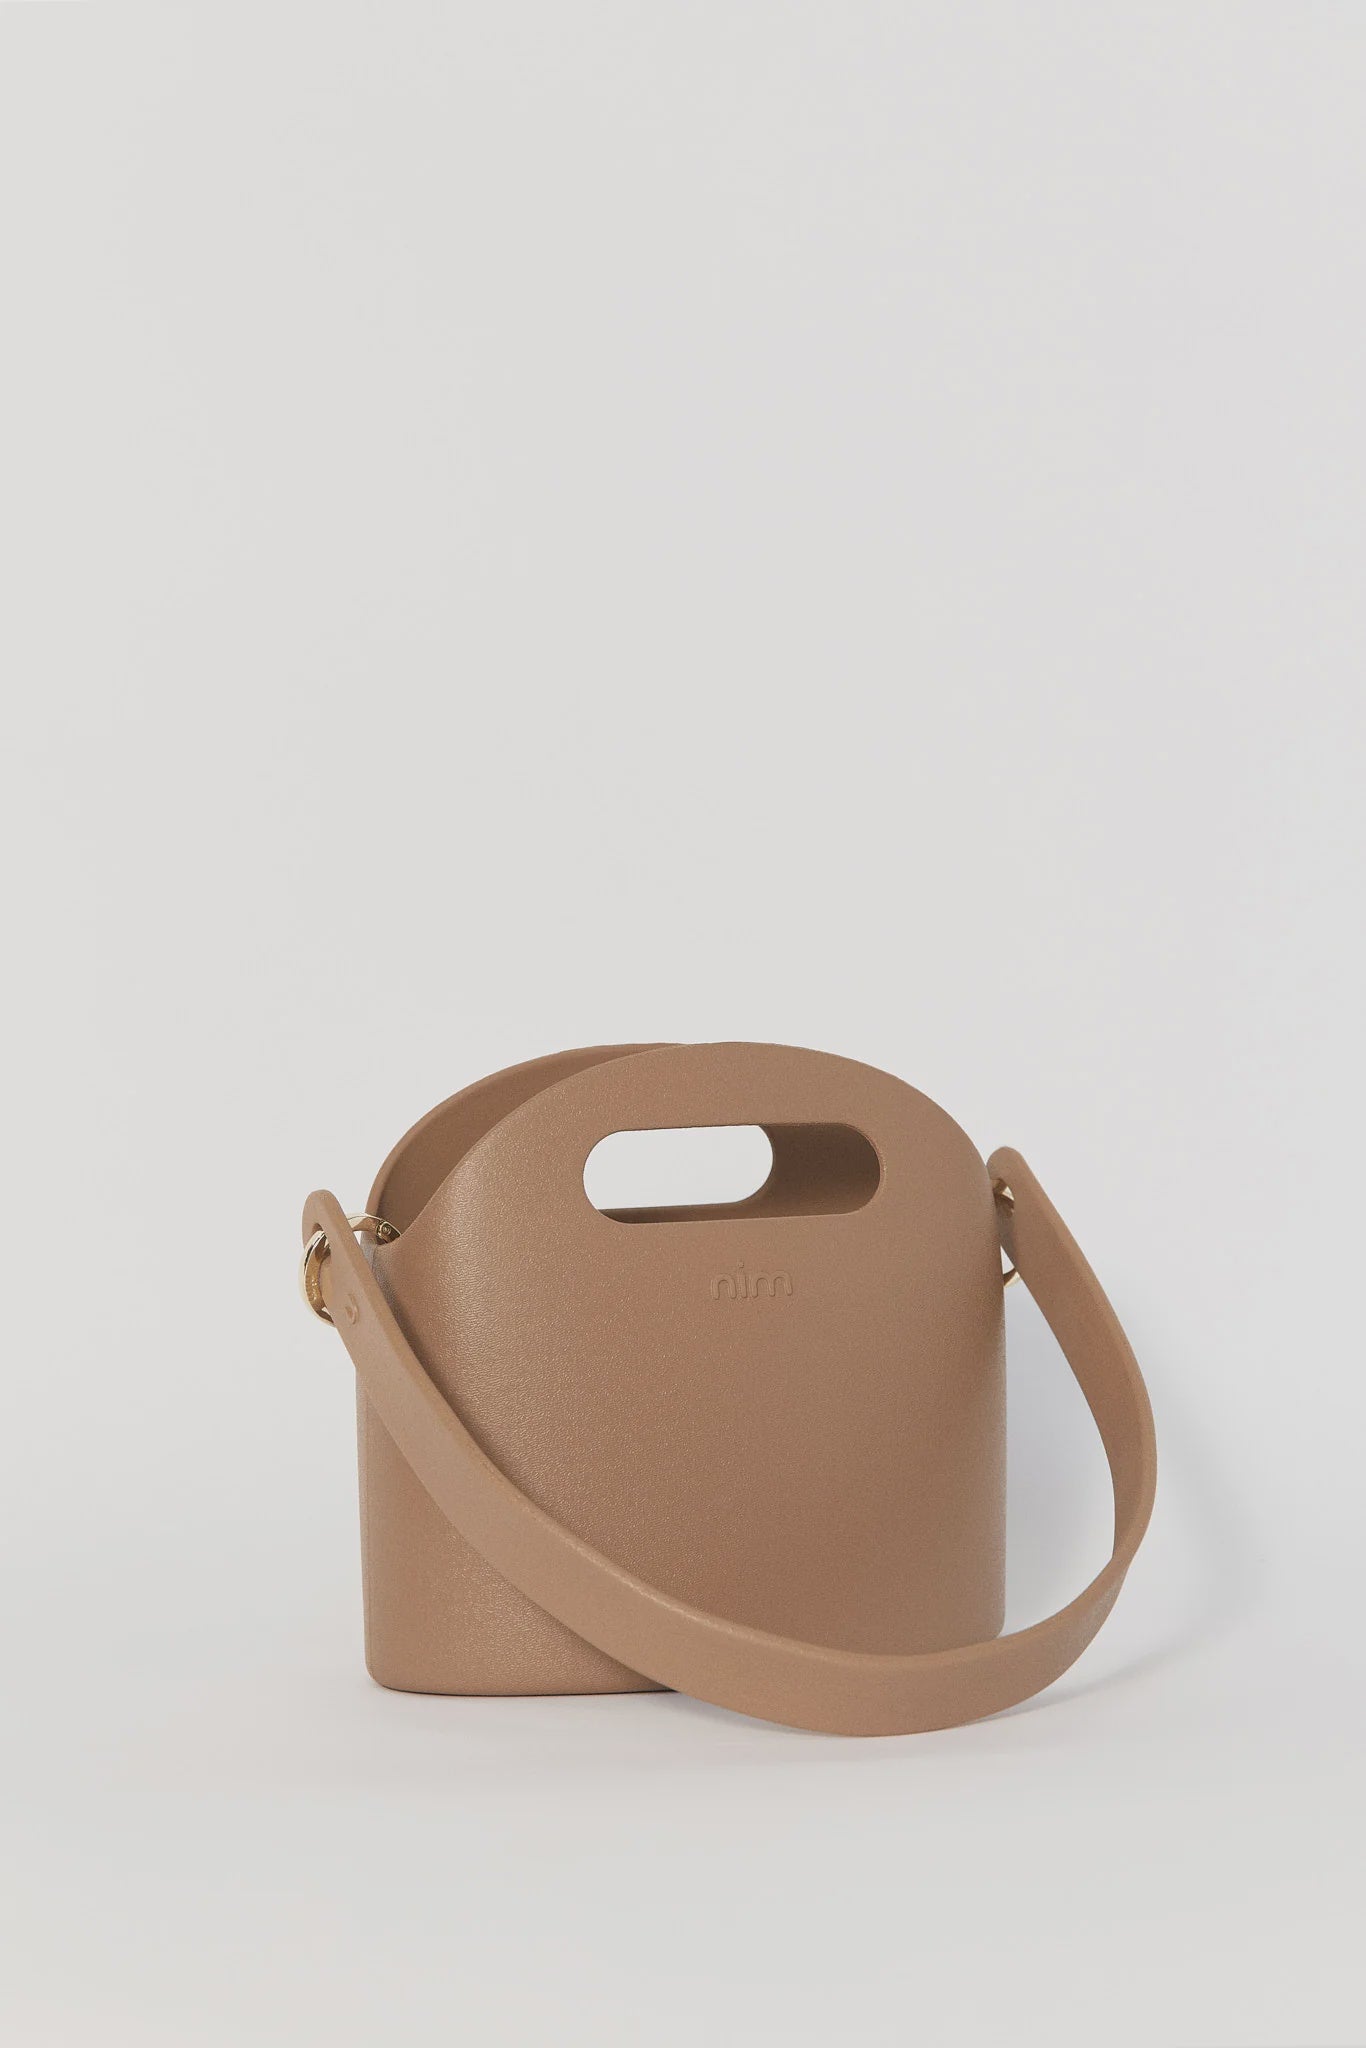 Nim The Label Handbags - Small Nim The Label | BB Mini - Latte